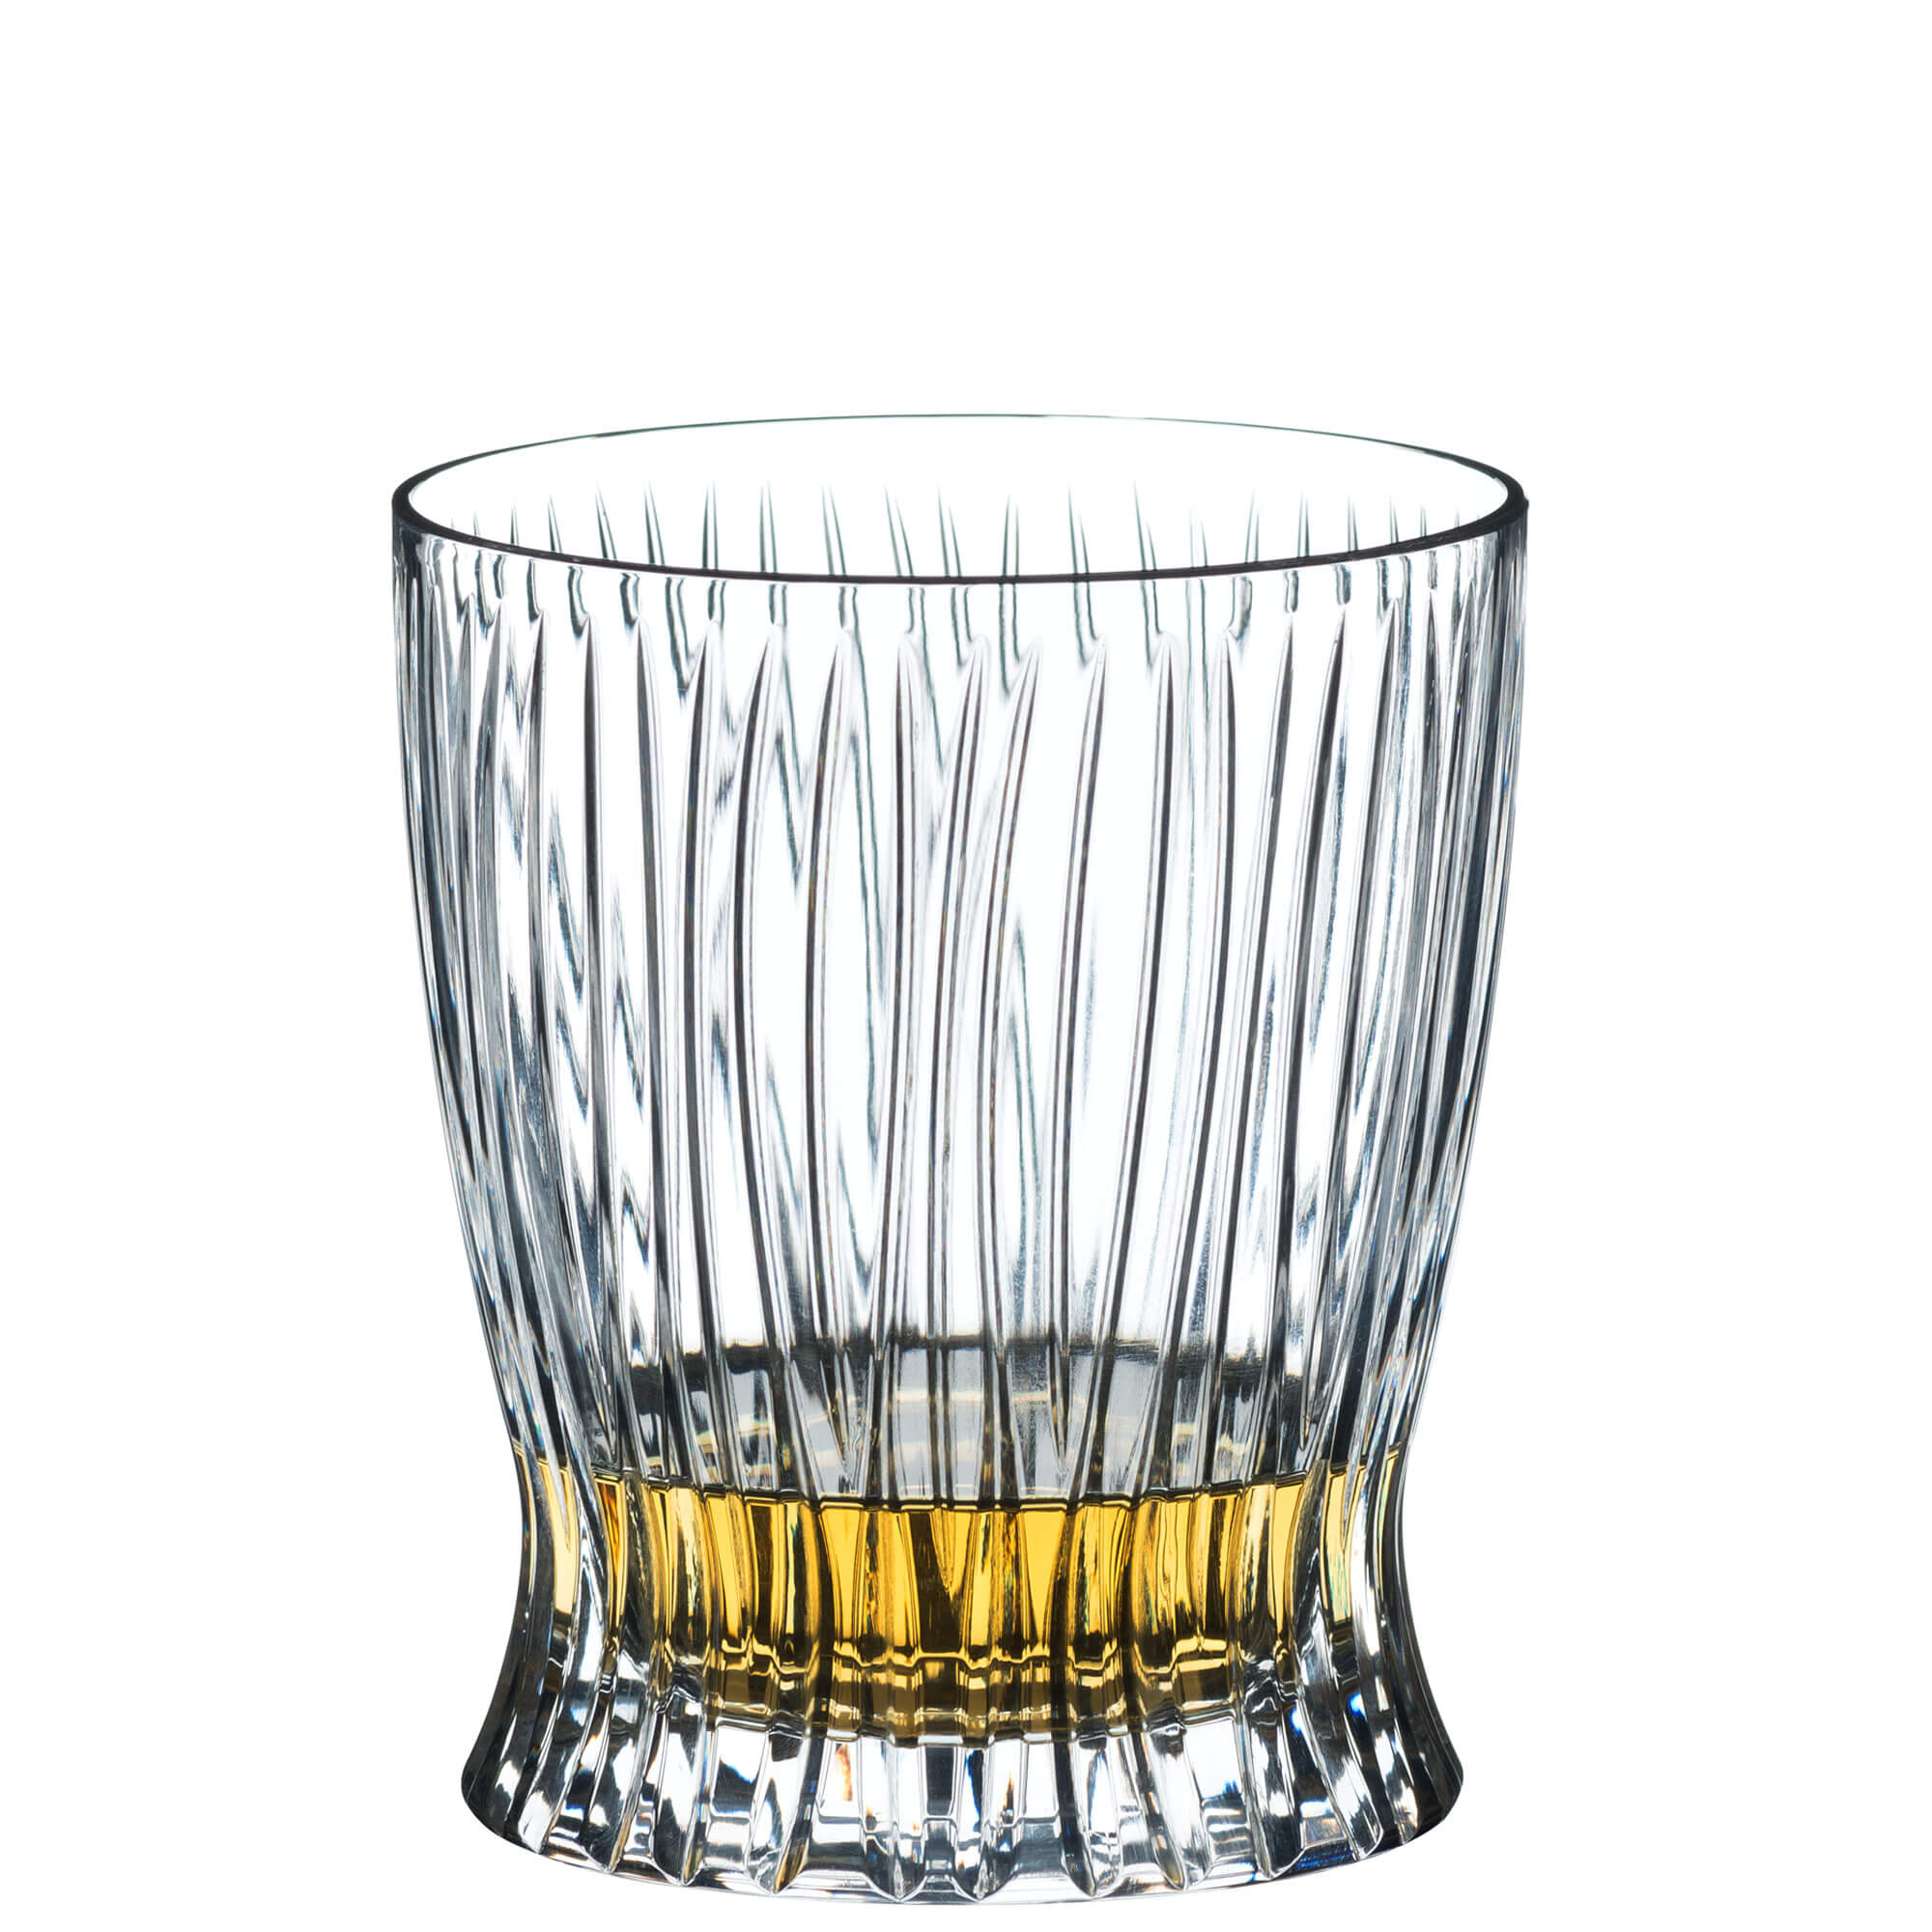 Whiskyglas Fire, Riedel - 295ml (2 Stk.)